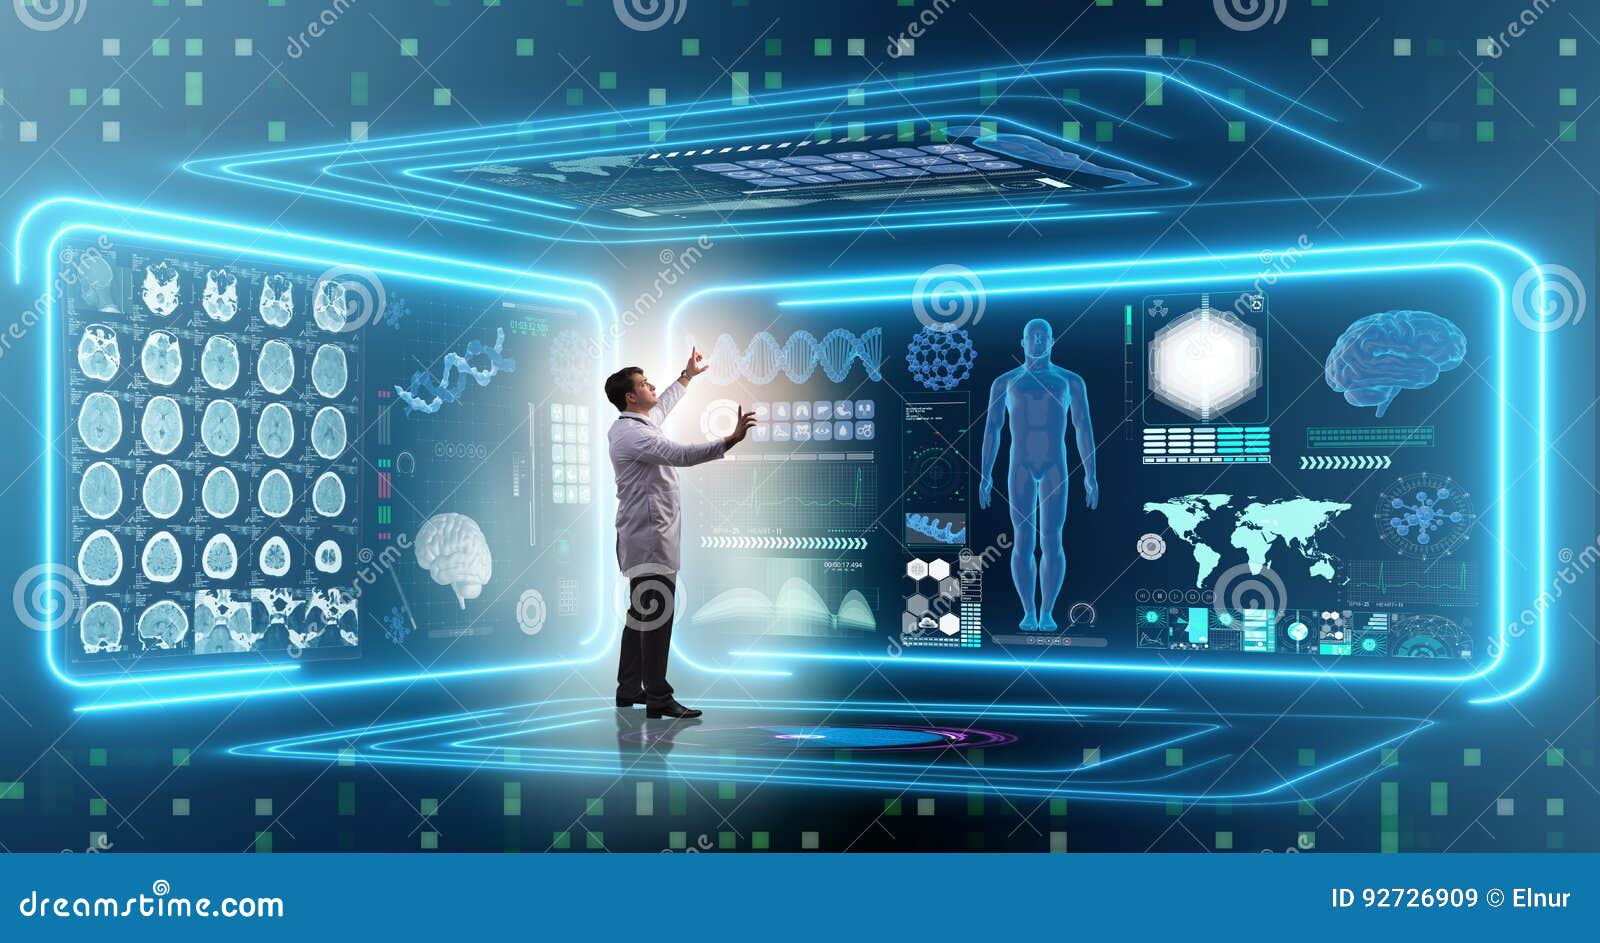 the man doctor in futuristic medicine medical concept